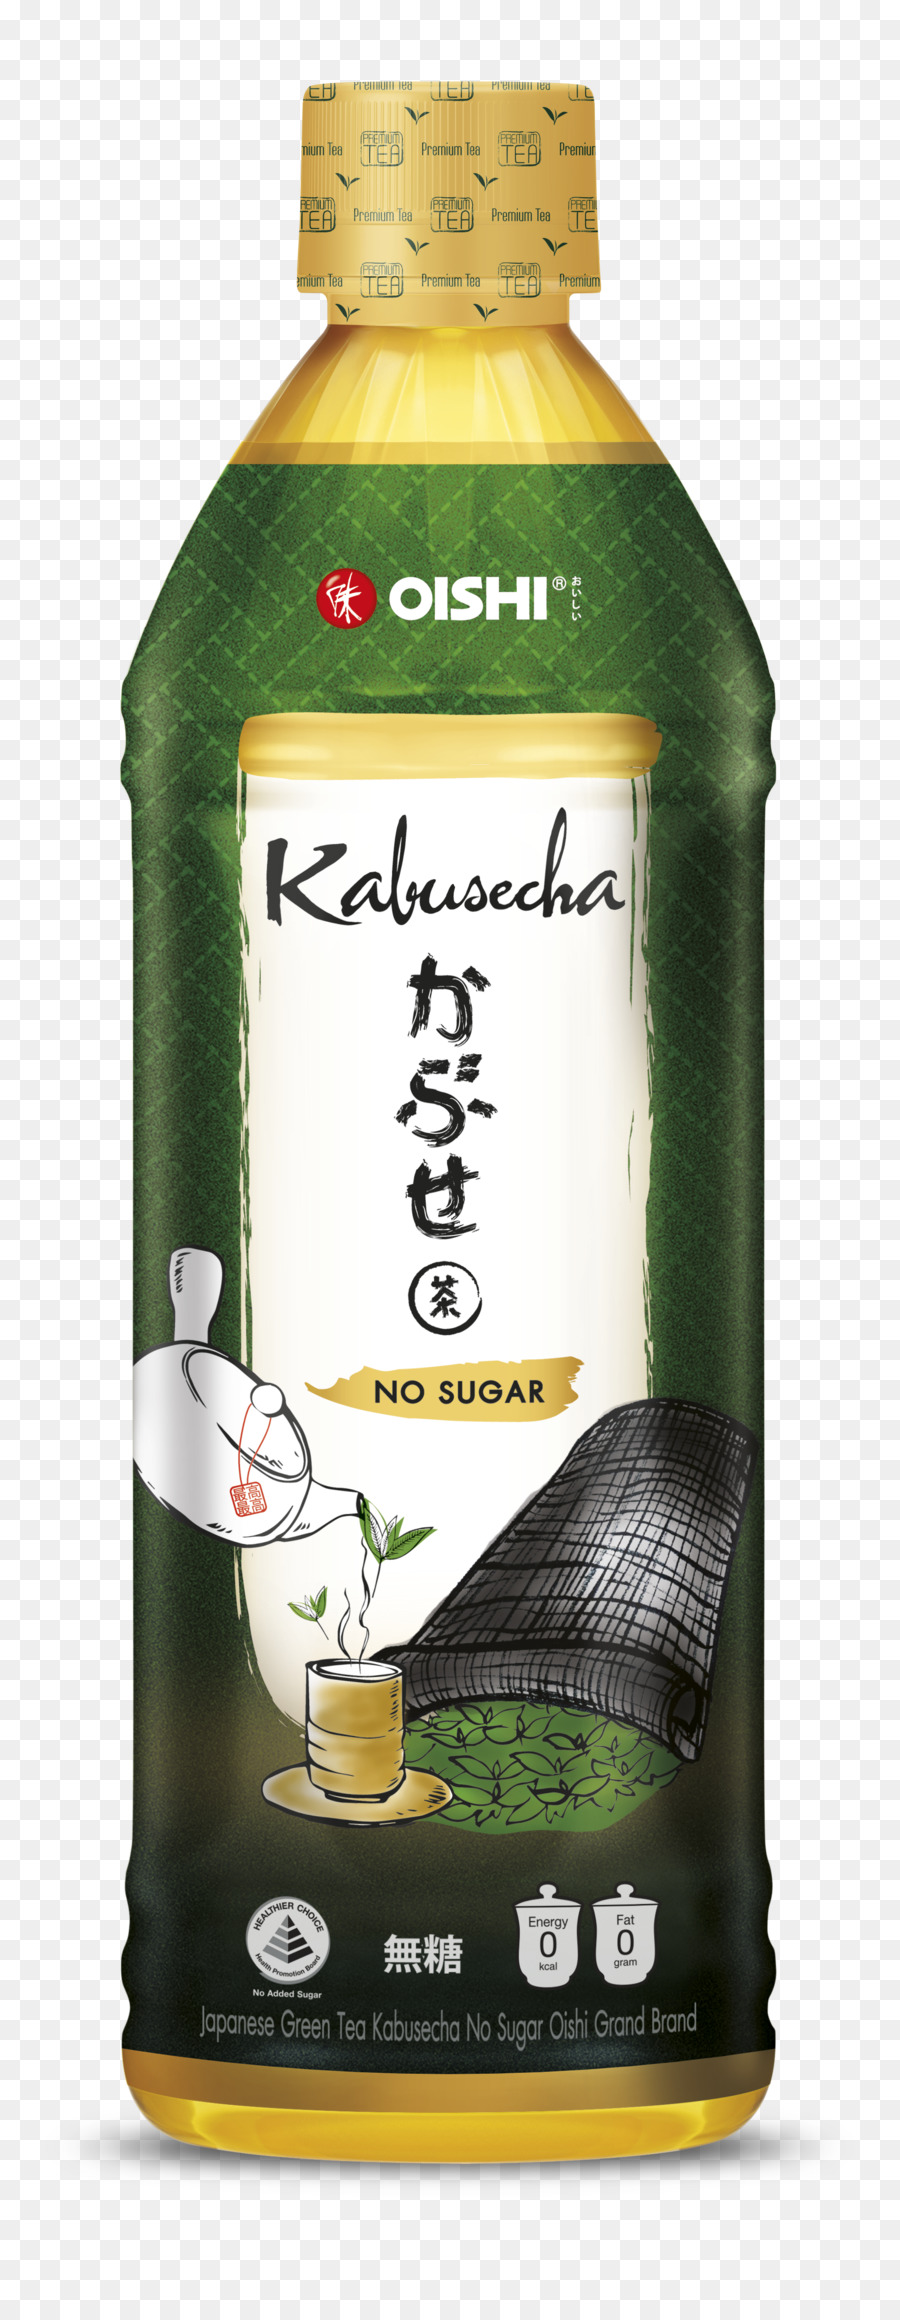 Kabusecha tè Verde Oishi Gruppo di Zucchero - tè verde